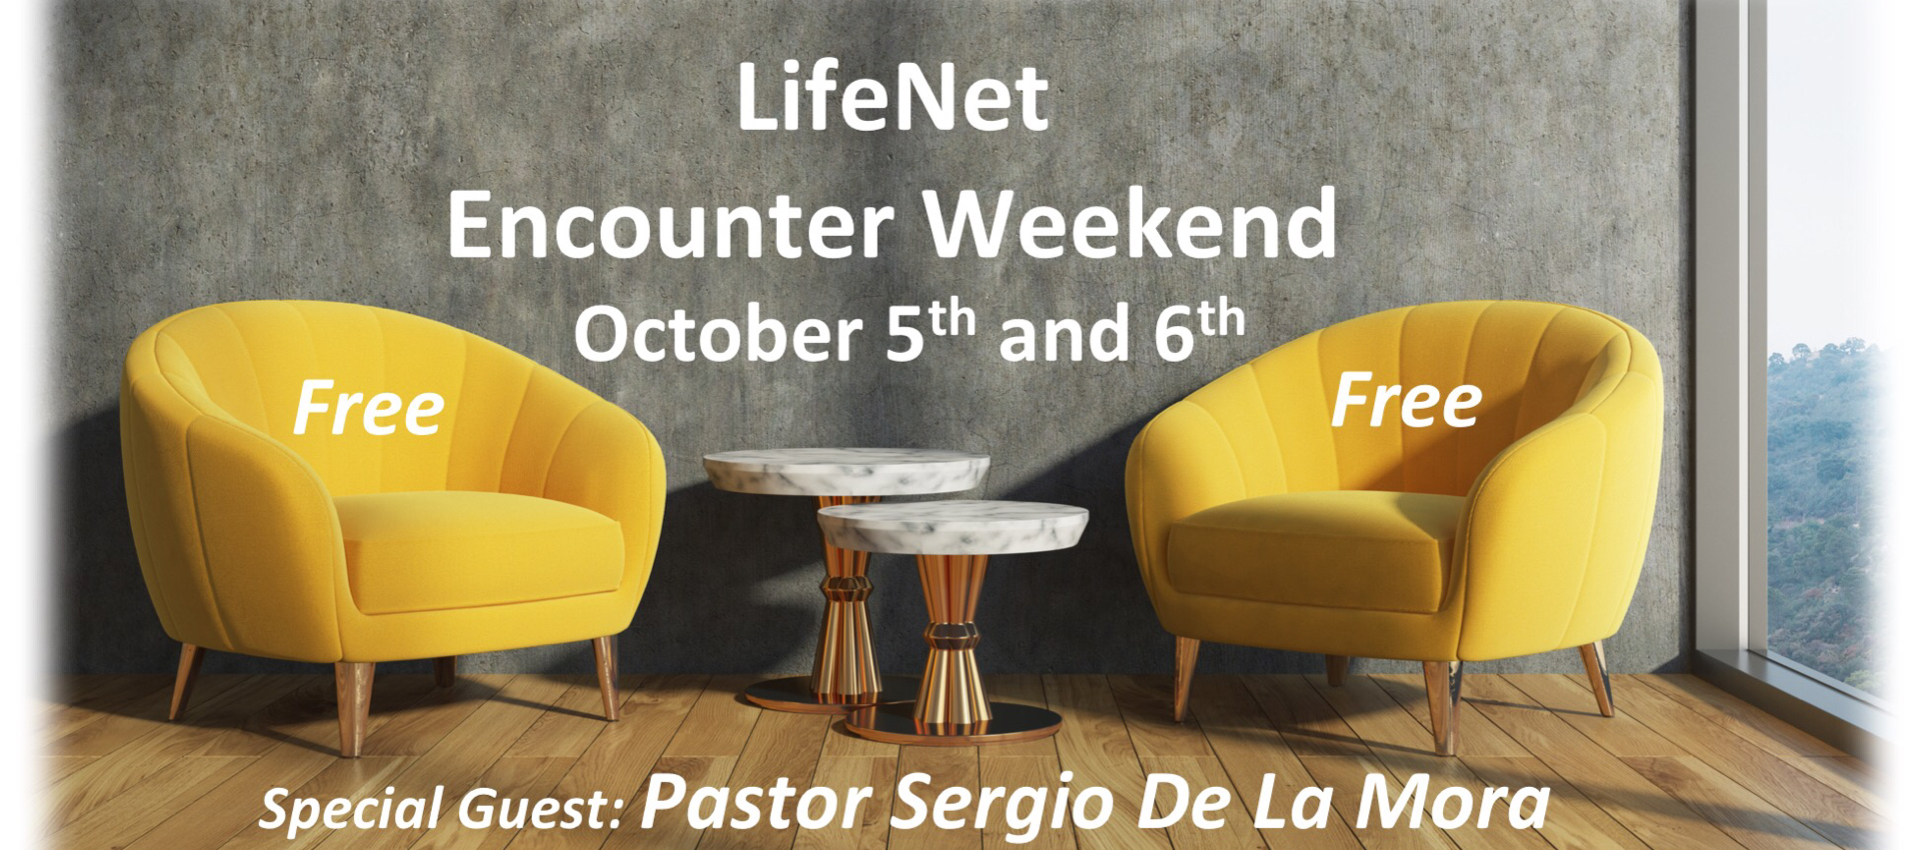 LifeNet Encounter Weekend
